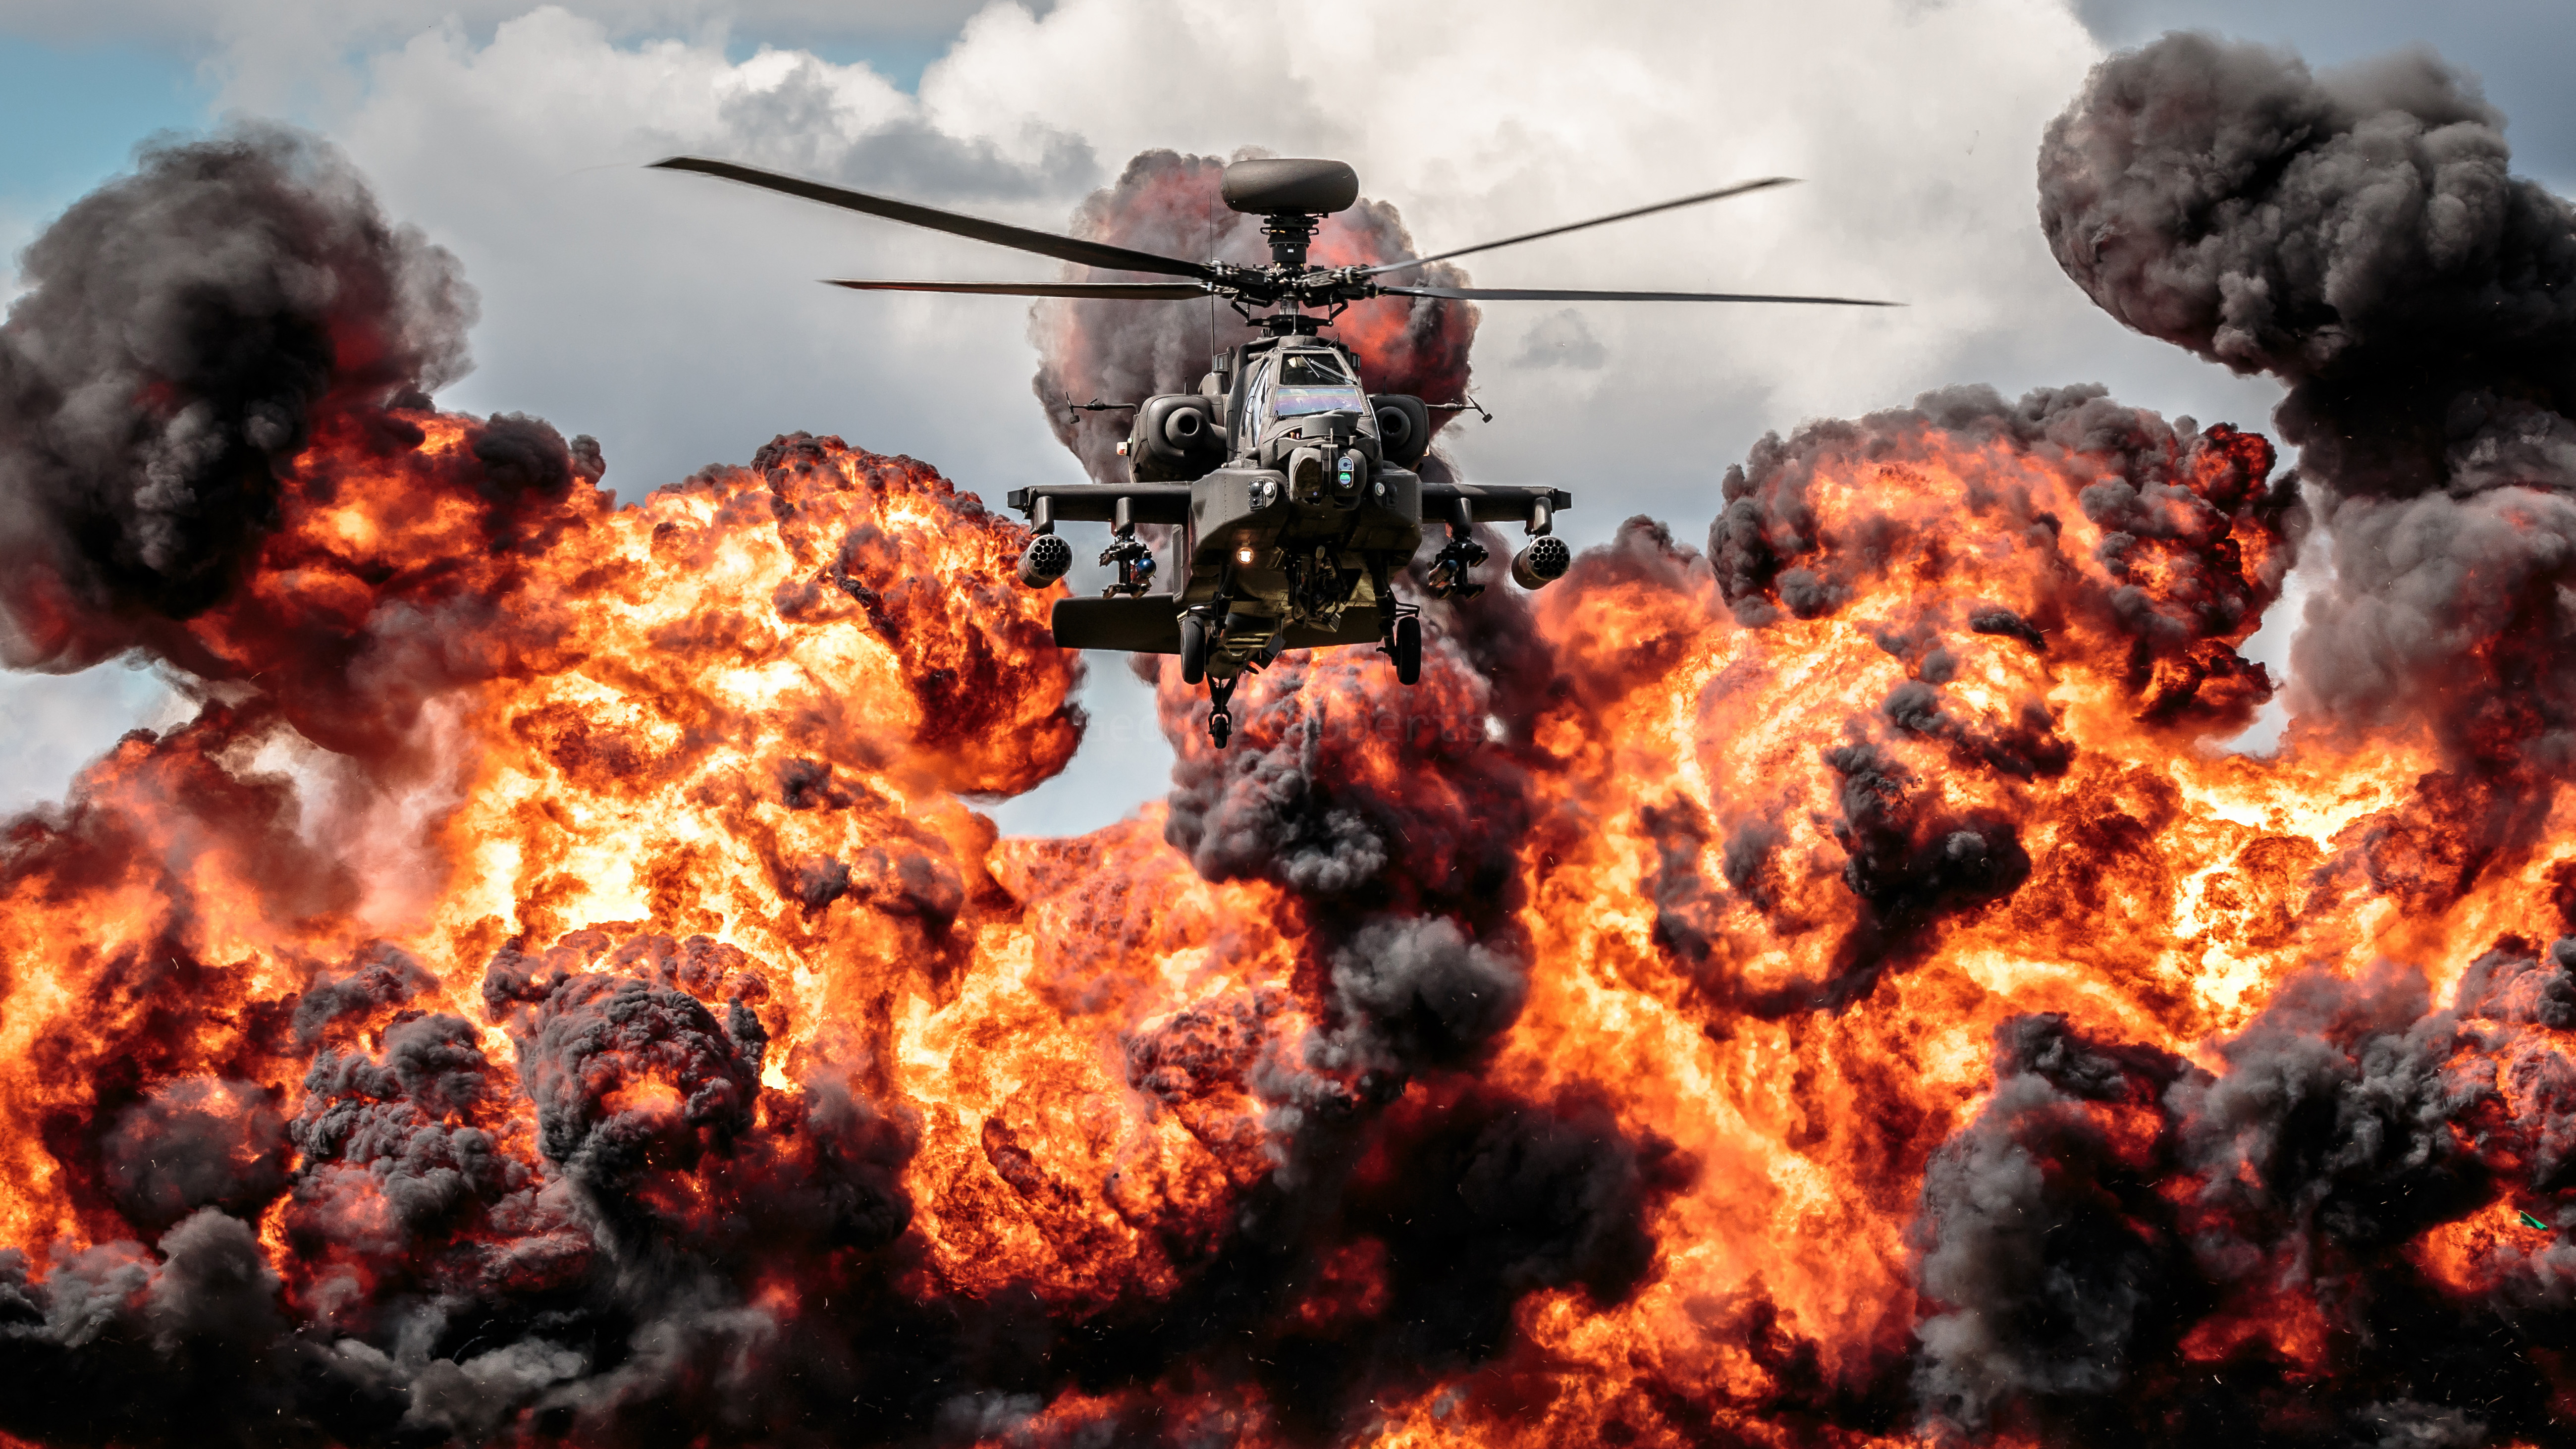 Helicopter Apache Explosion Fire Hd Desktop Wallpaper 50x2925 Wallpapers13 Com